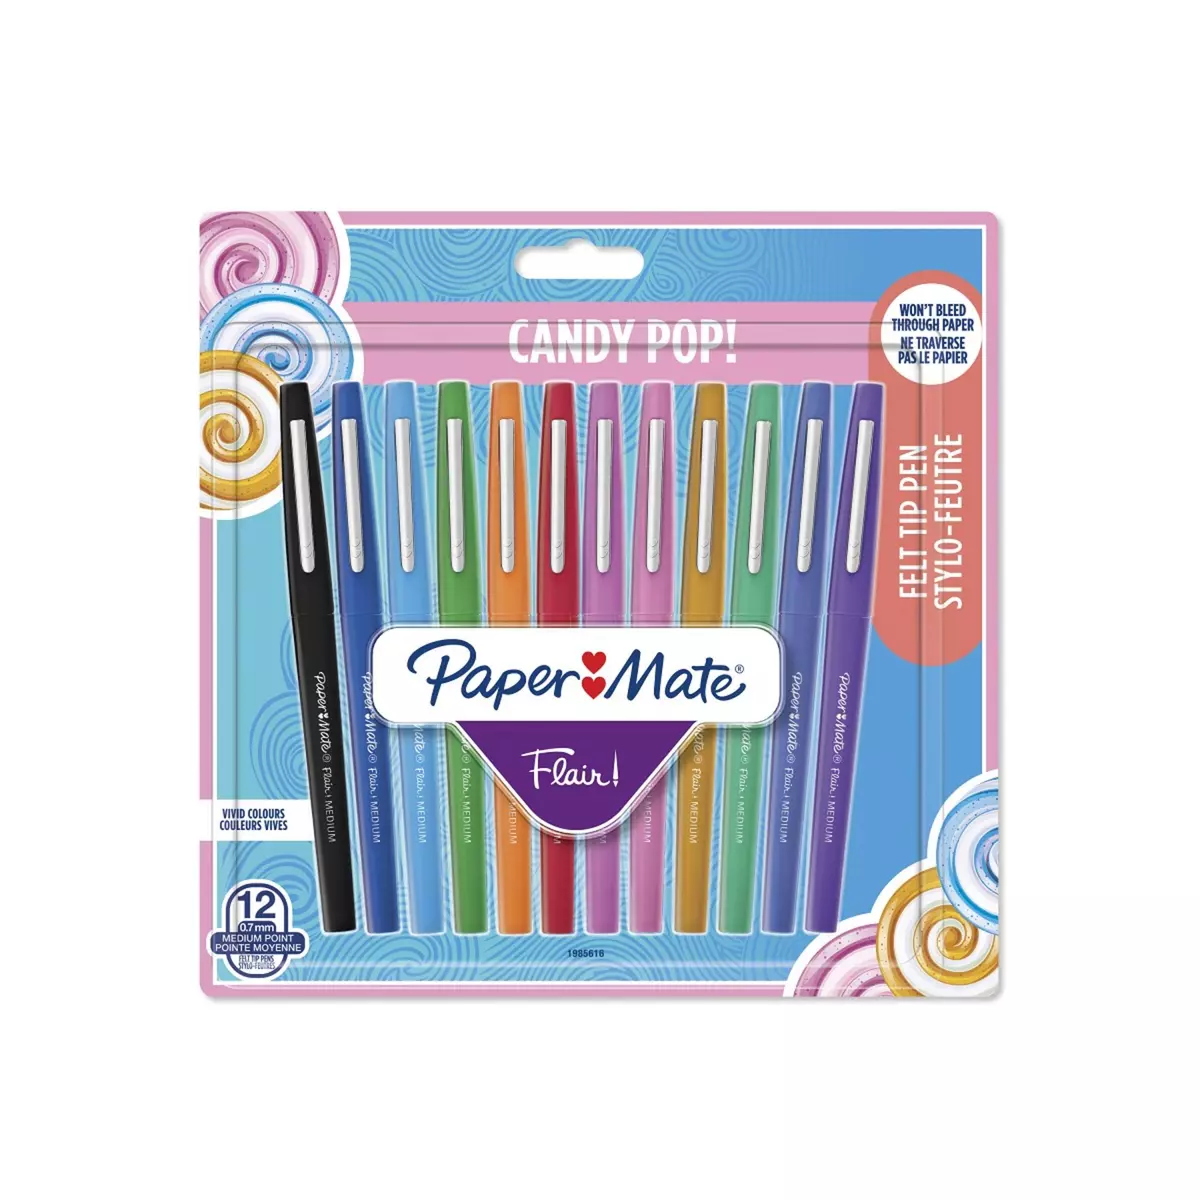 STABILO  Lot de 12 stylos feutres Flair Candy Pop assortis fun